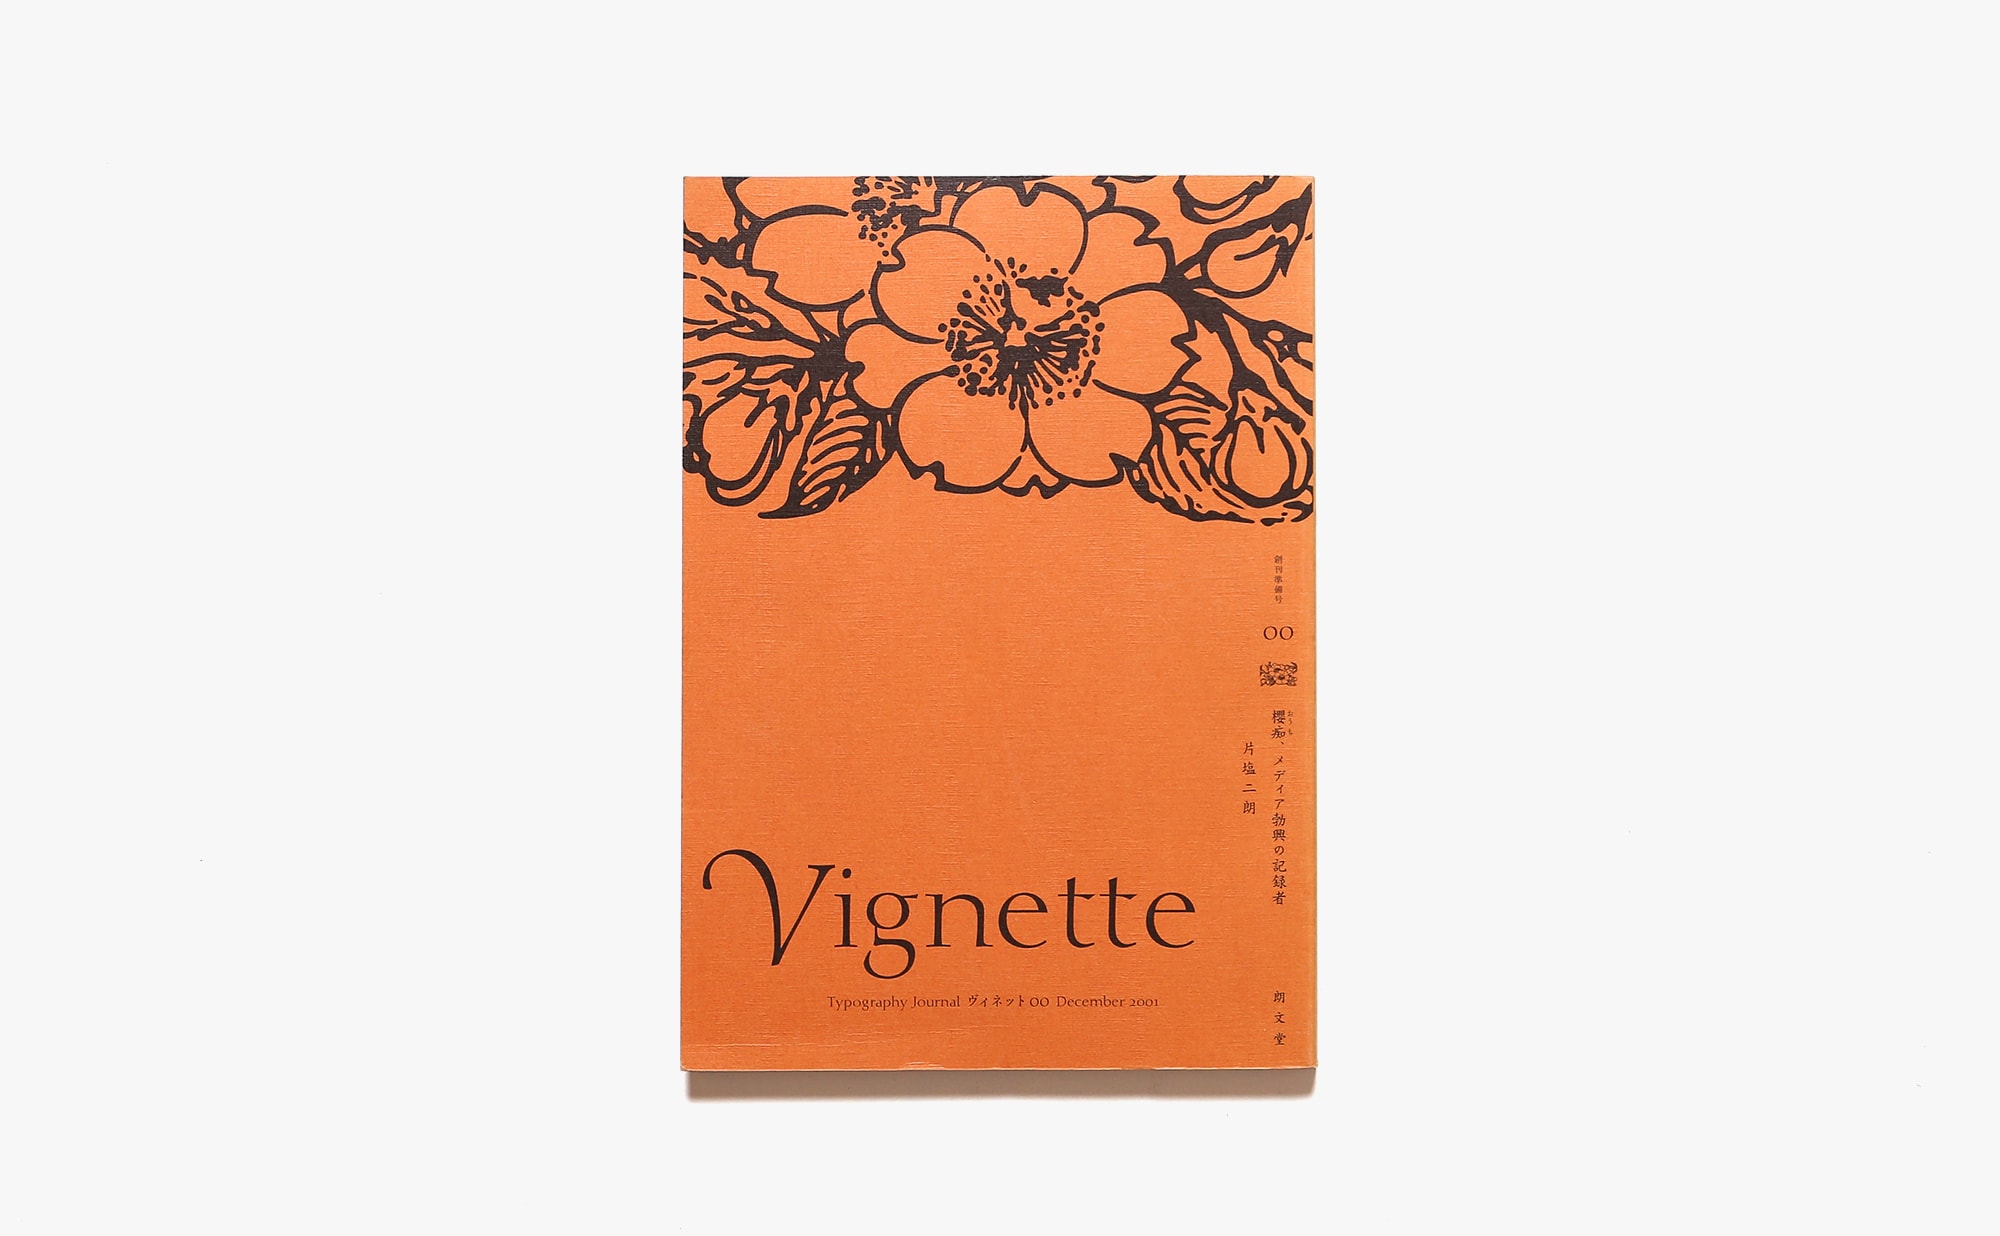 Vignette Typography Journal ヴィネット 0号 櫻痴、メディア勃興の記録者 | 朗文堂